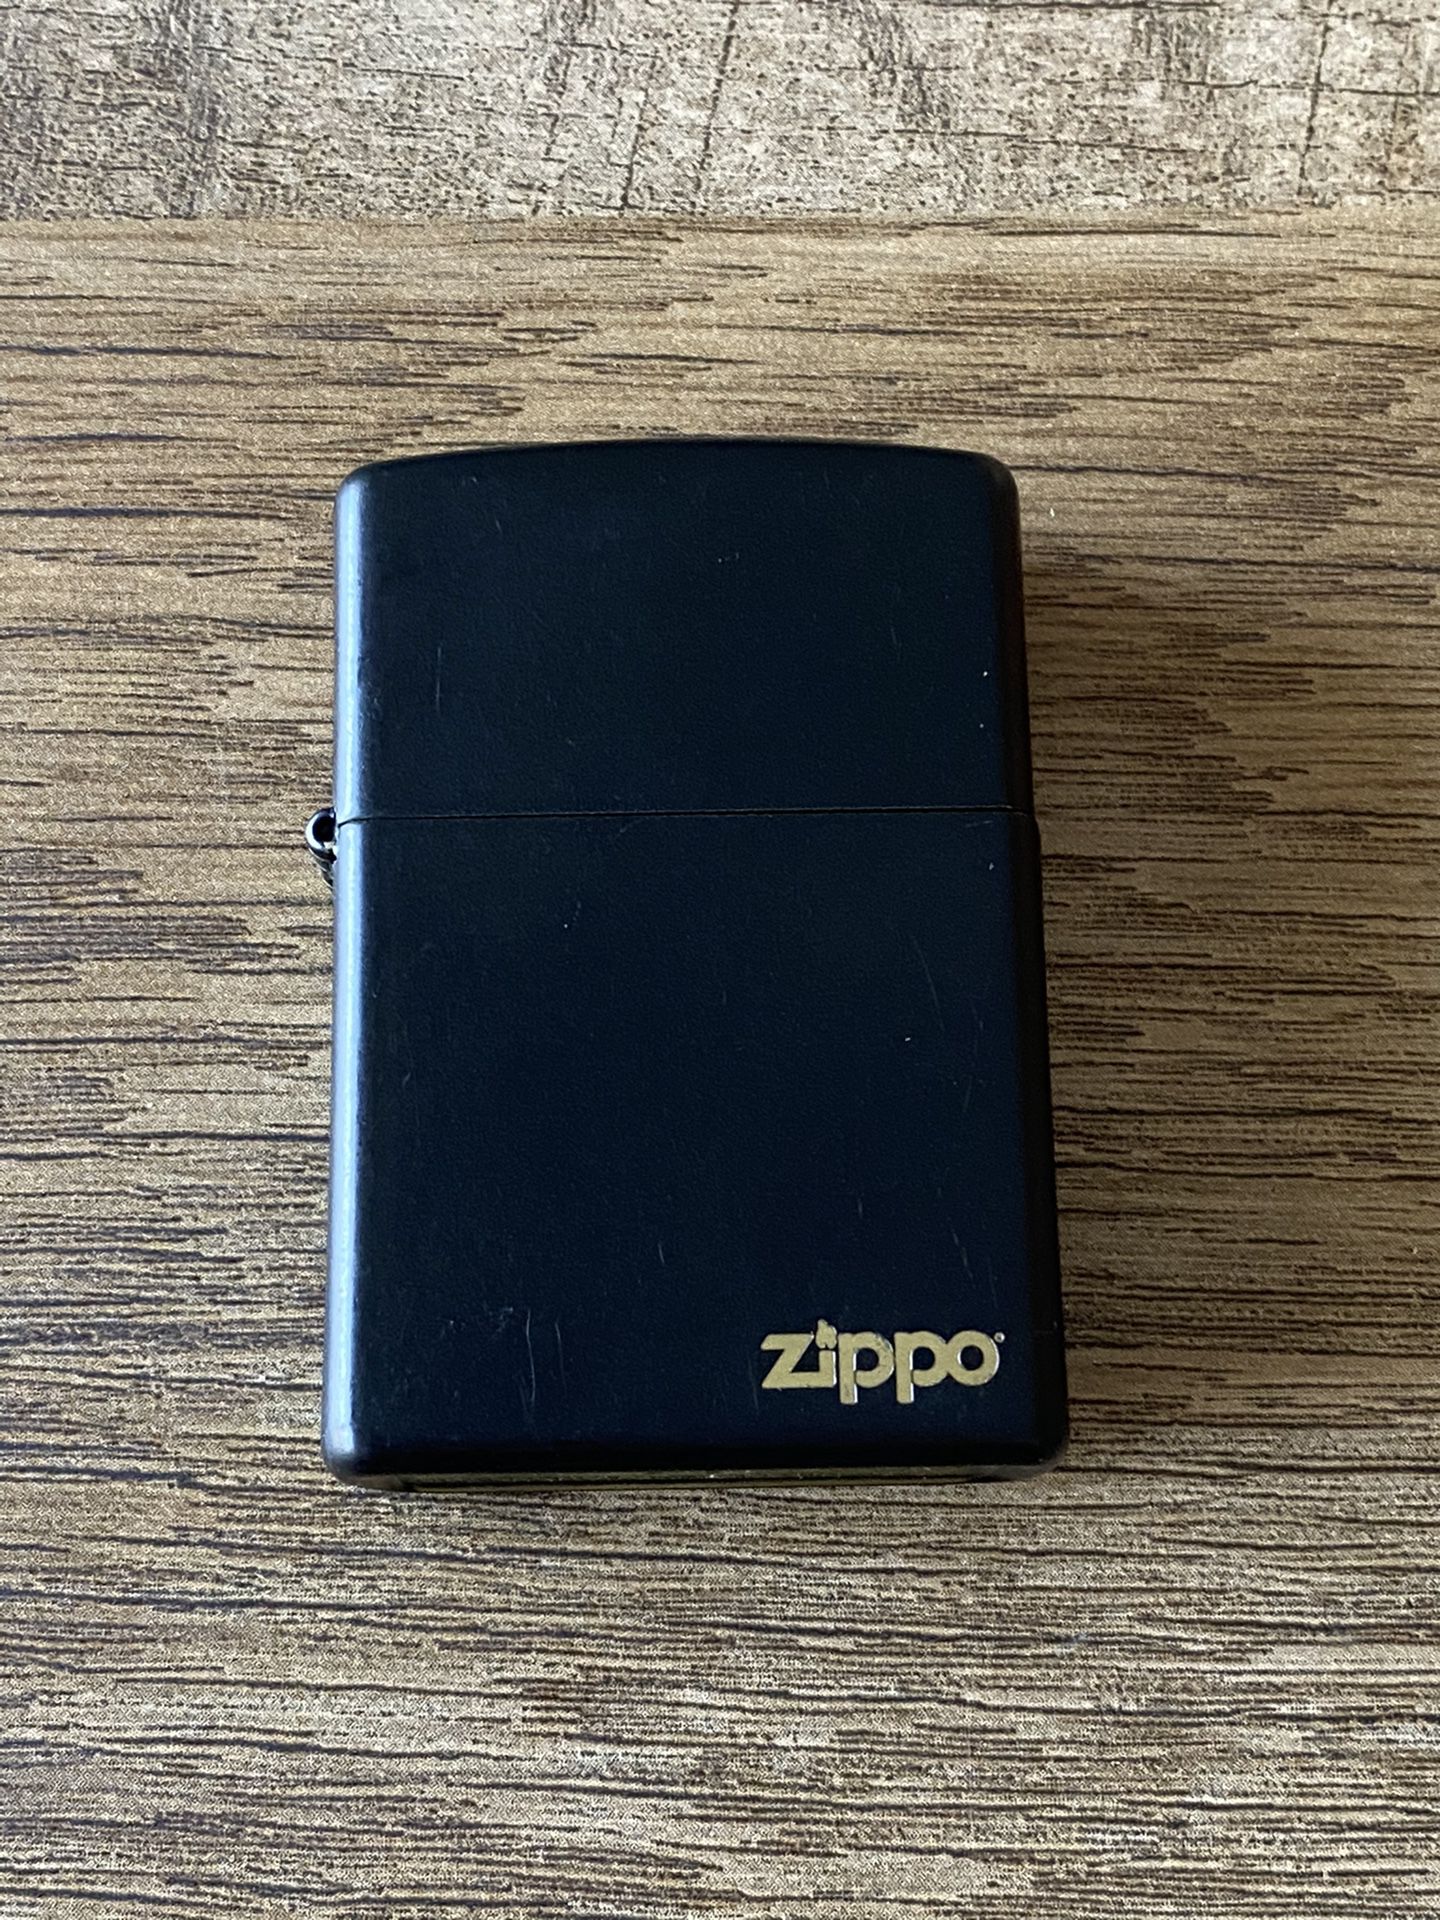 Zippo Lighter- Excellent Condition